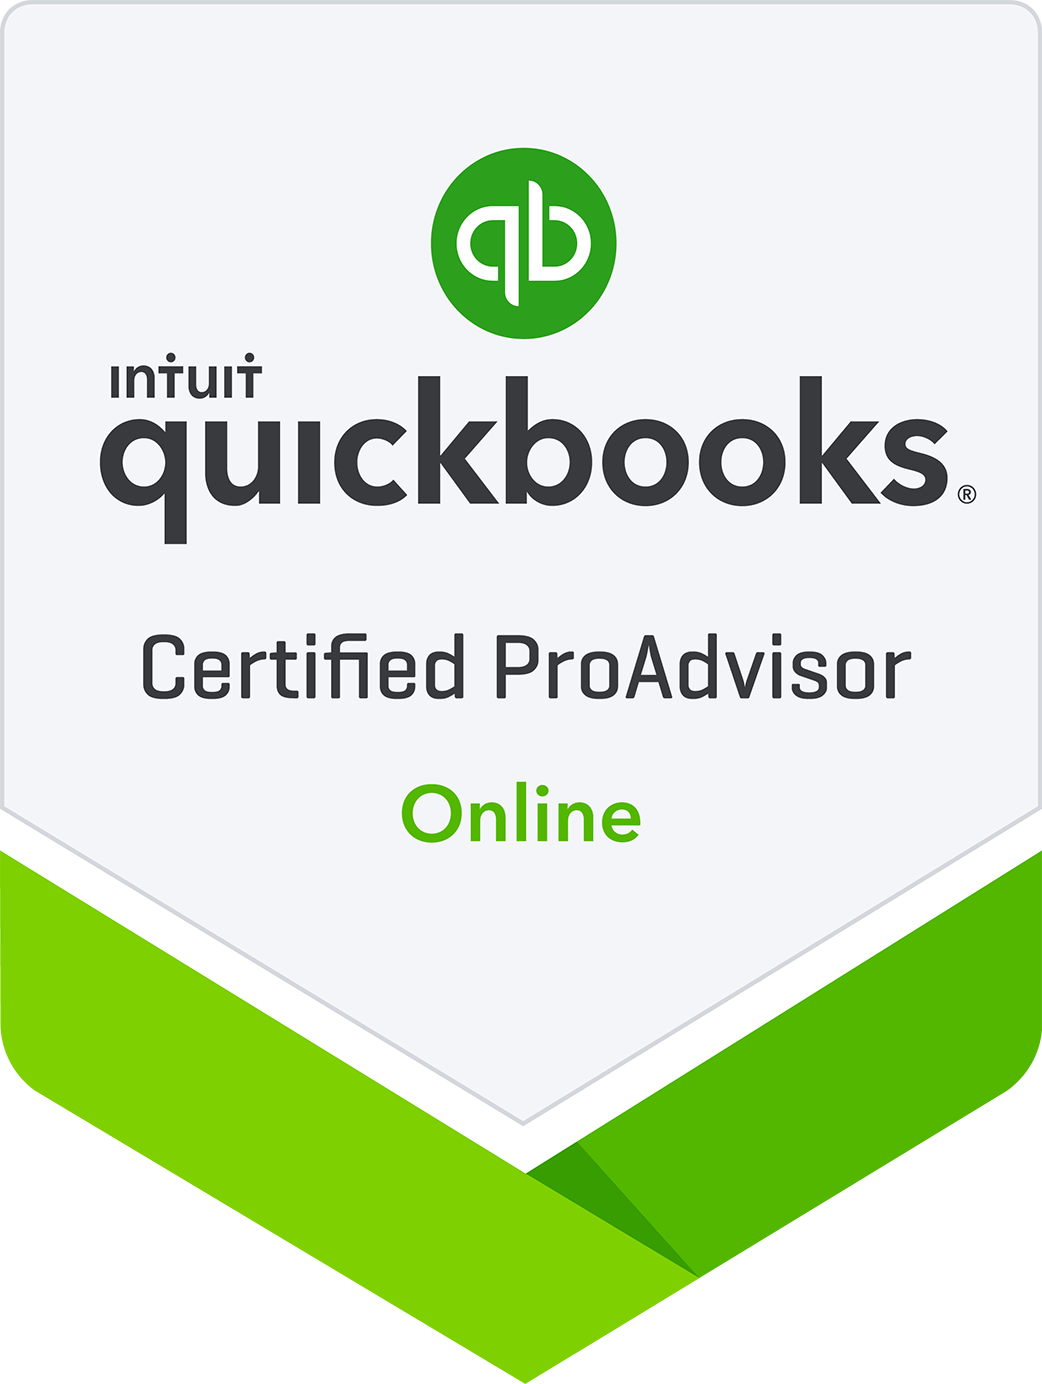 quickbooks certified proadvisor online badge